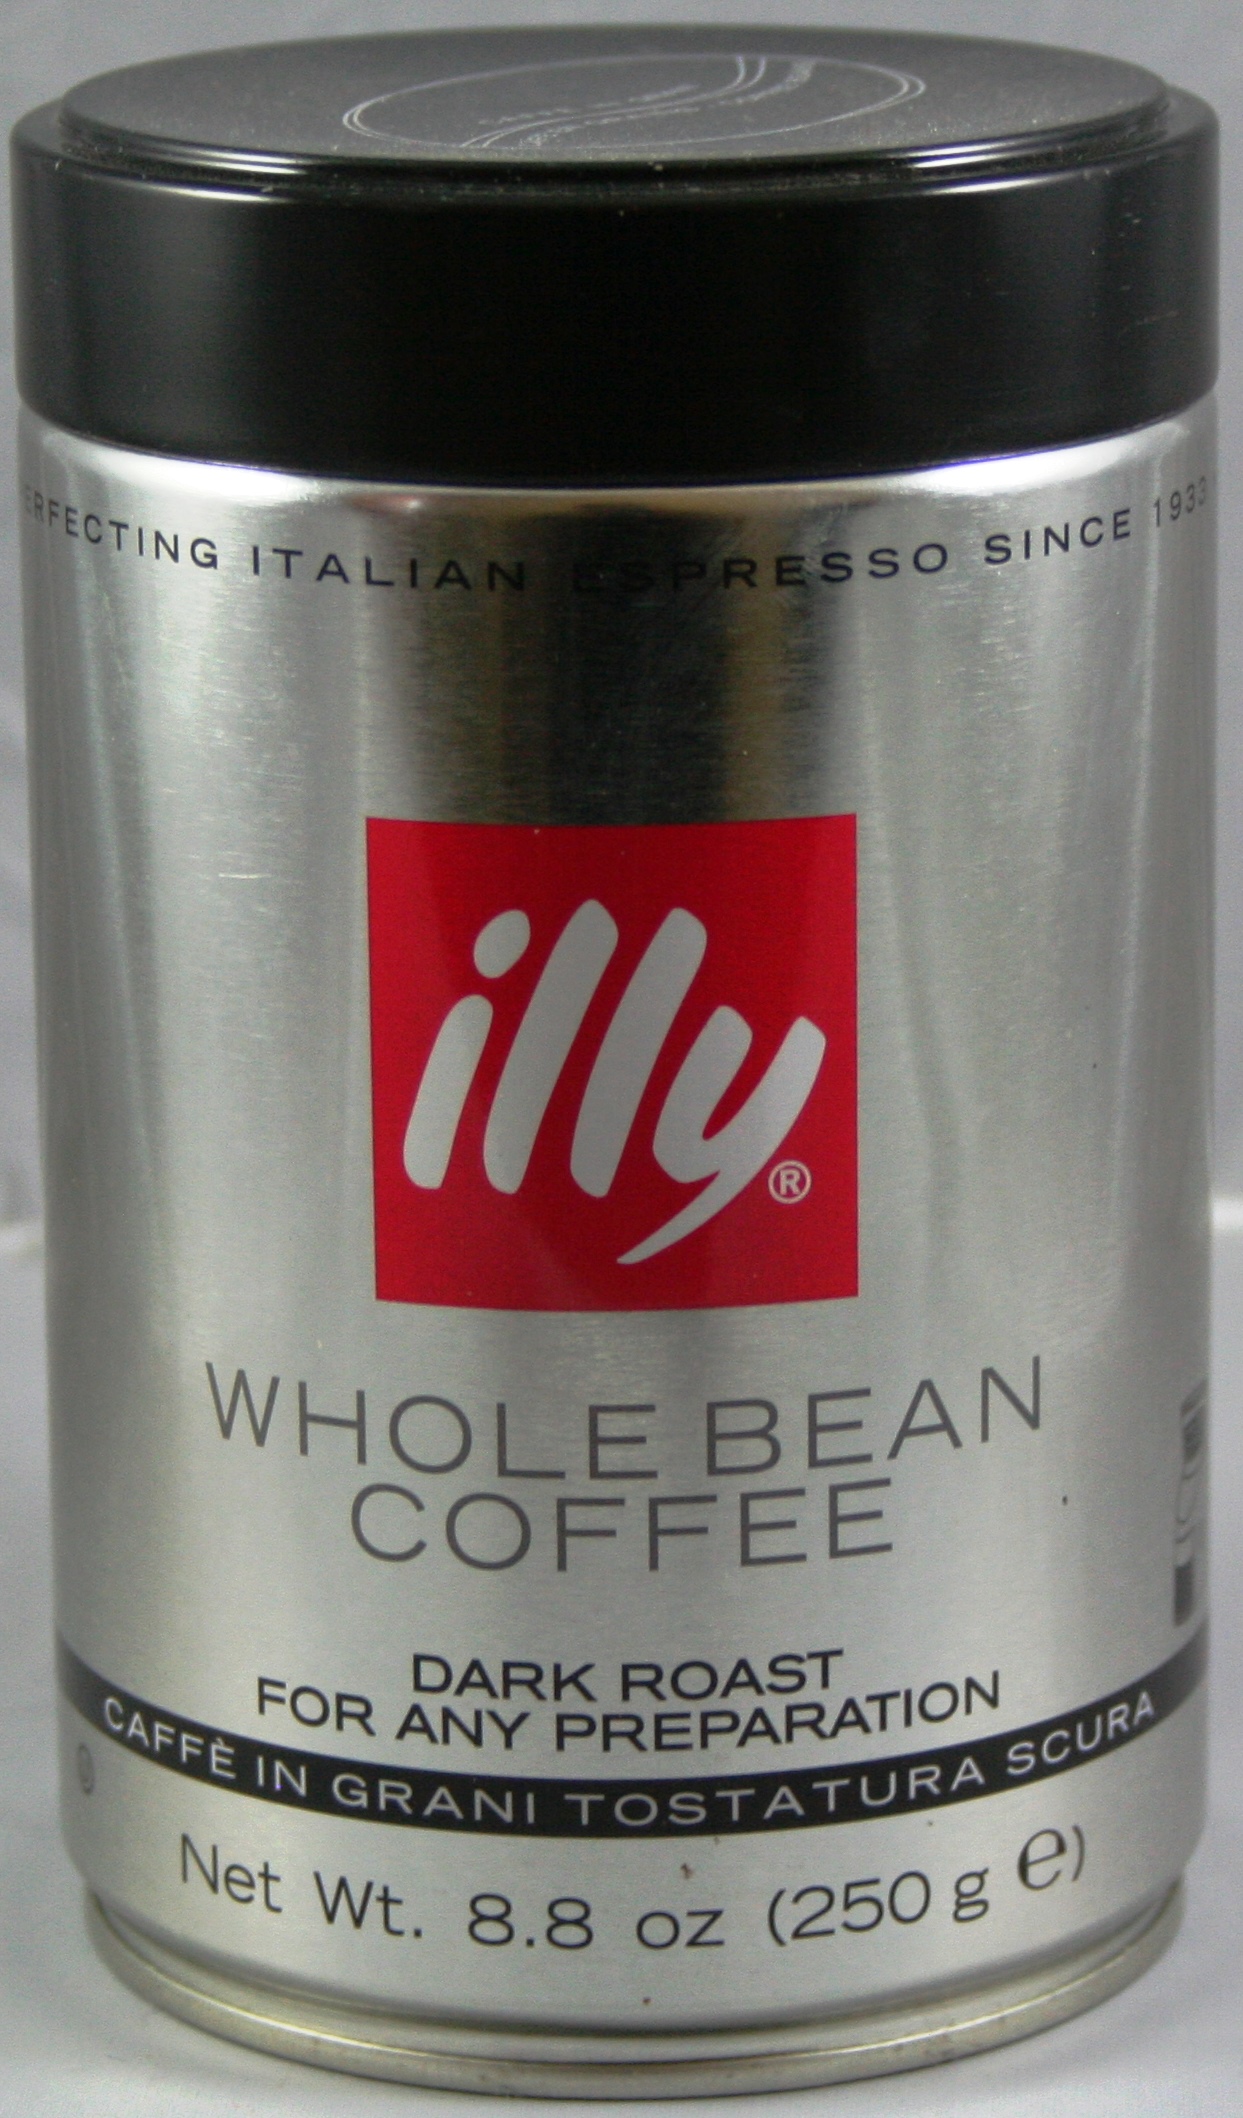 Illy Caffe Coffee Coffee - Whole Bean - Dark Roast - 8.8 oz - case